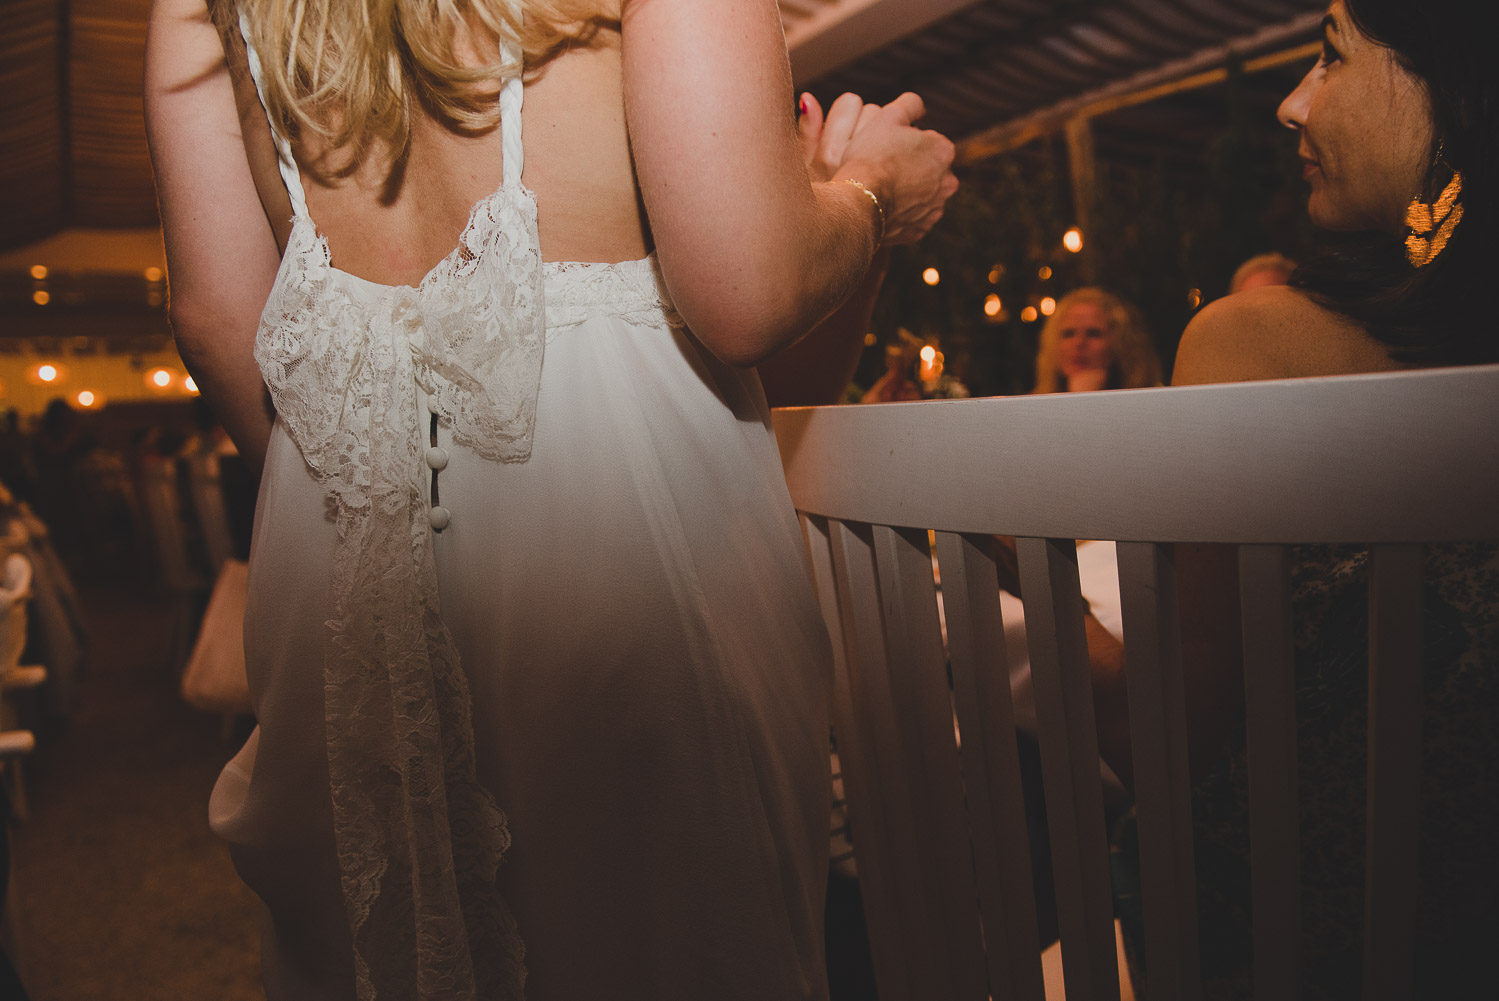 Wedding photographer Mykonos: gorgeous lace belt and the wedding dress at Elia for Mykonos wedding.